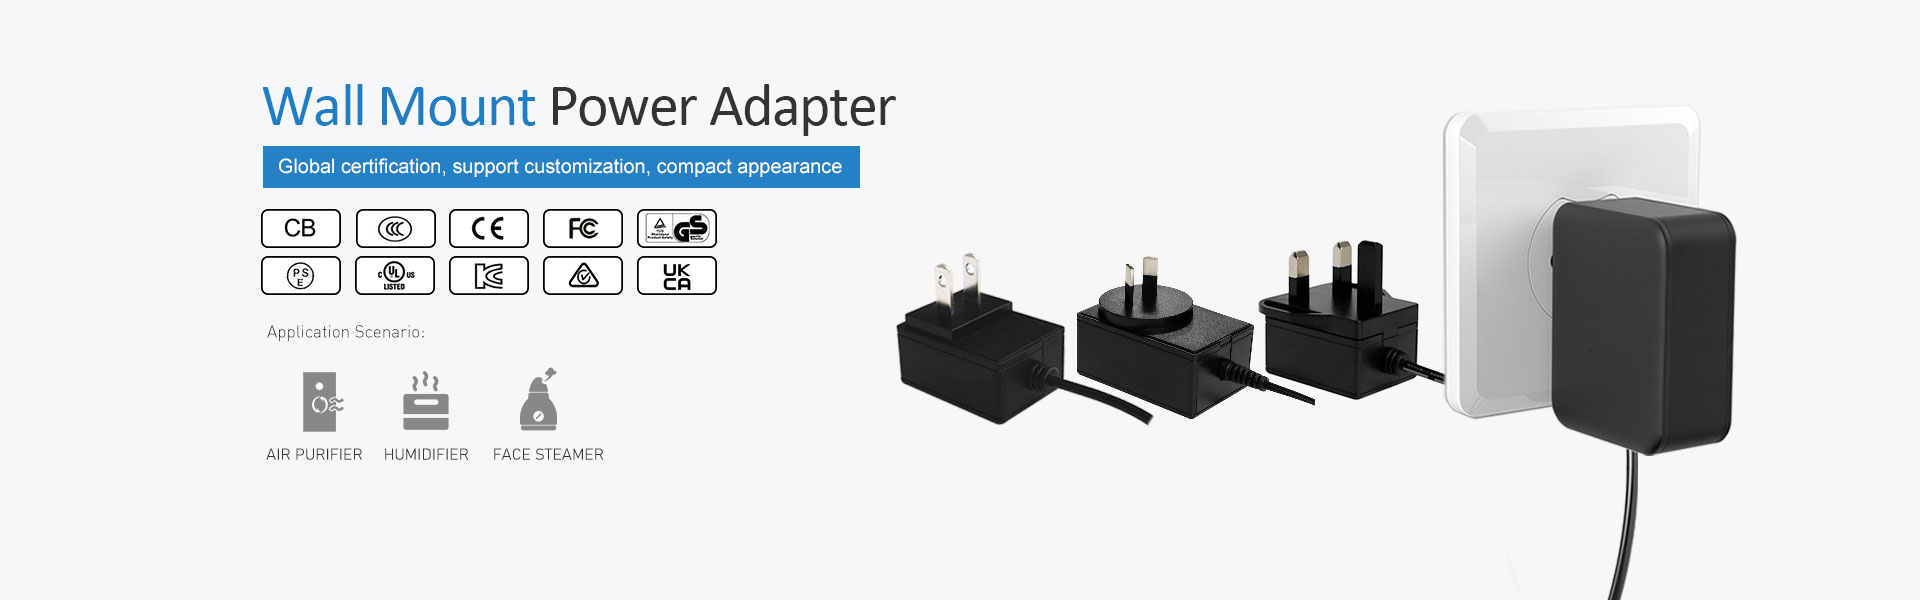 wall-mount-power-adapter-xin